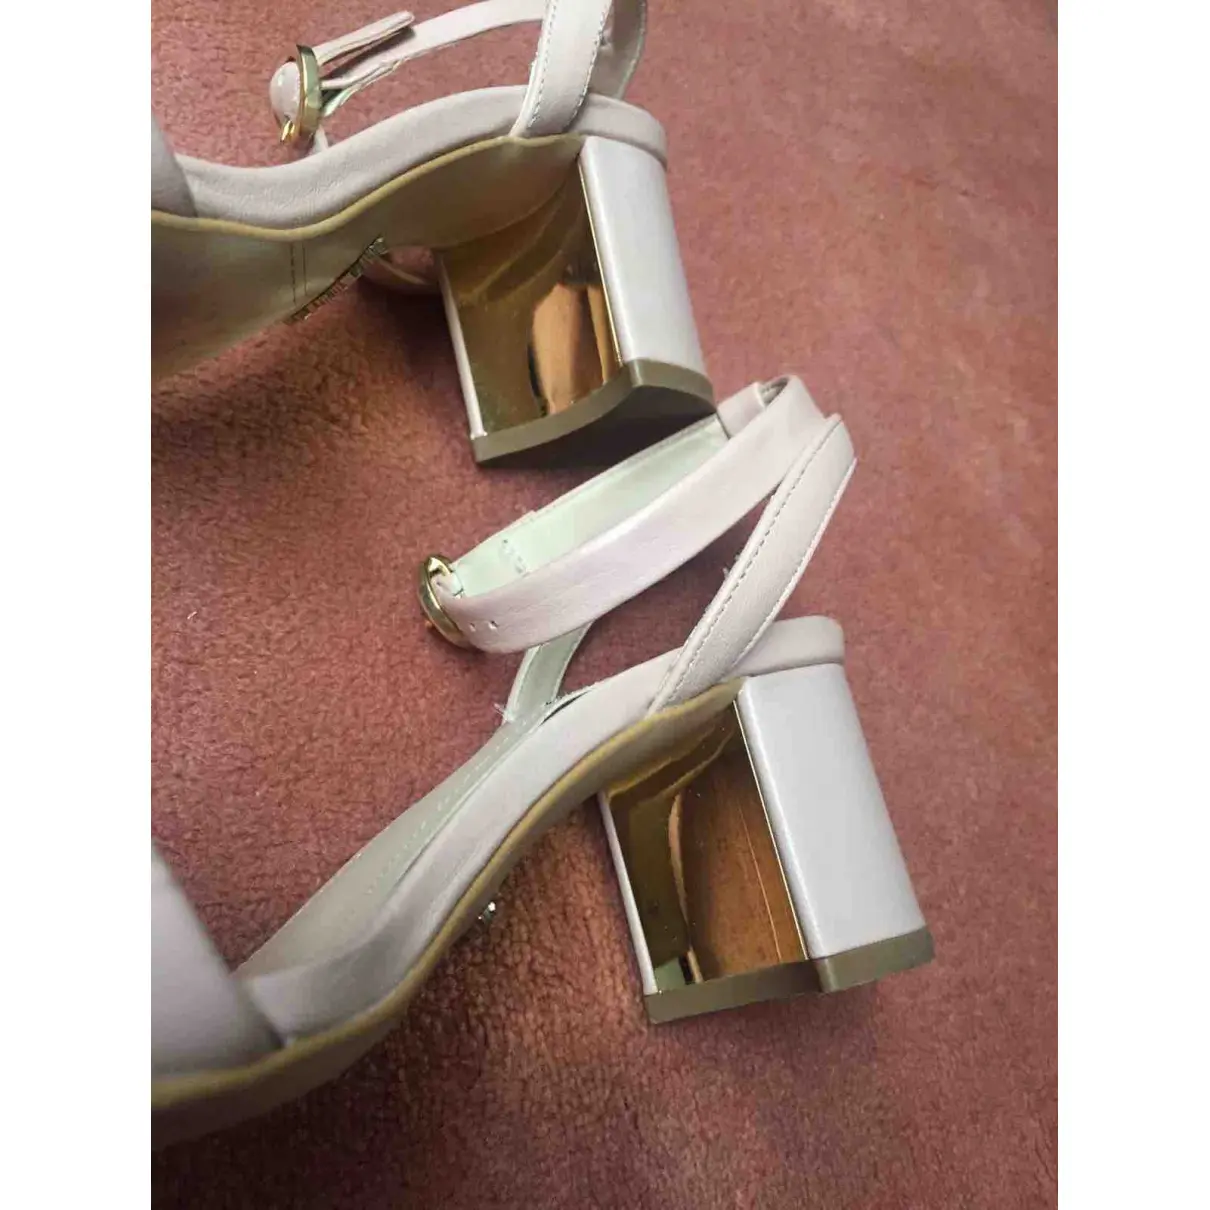 Leather sandals Massimo Dutti